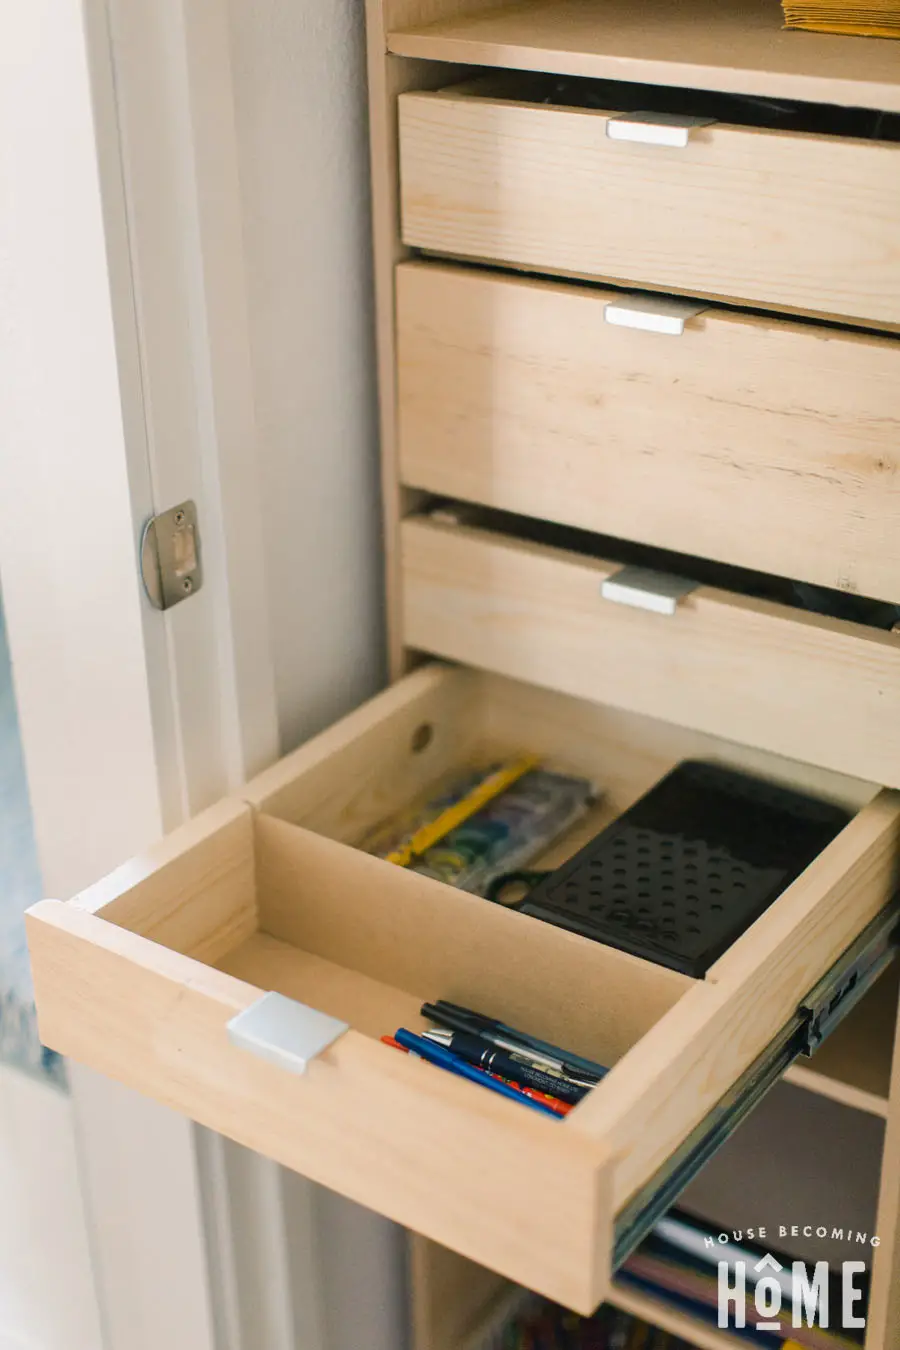 How to Make an Organizer for a Small Closet